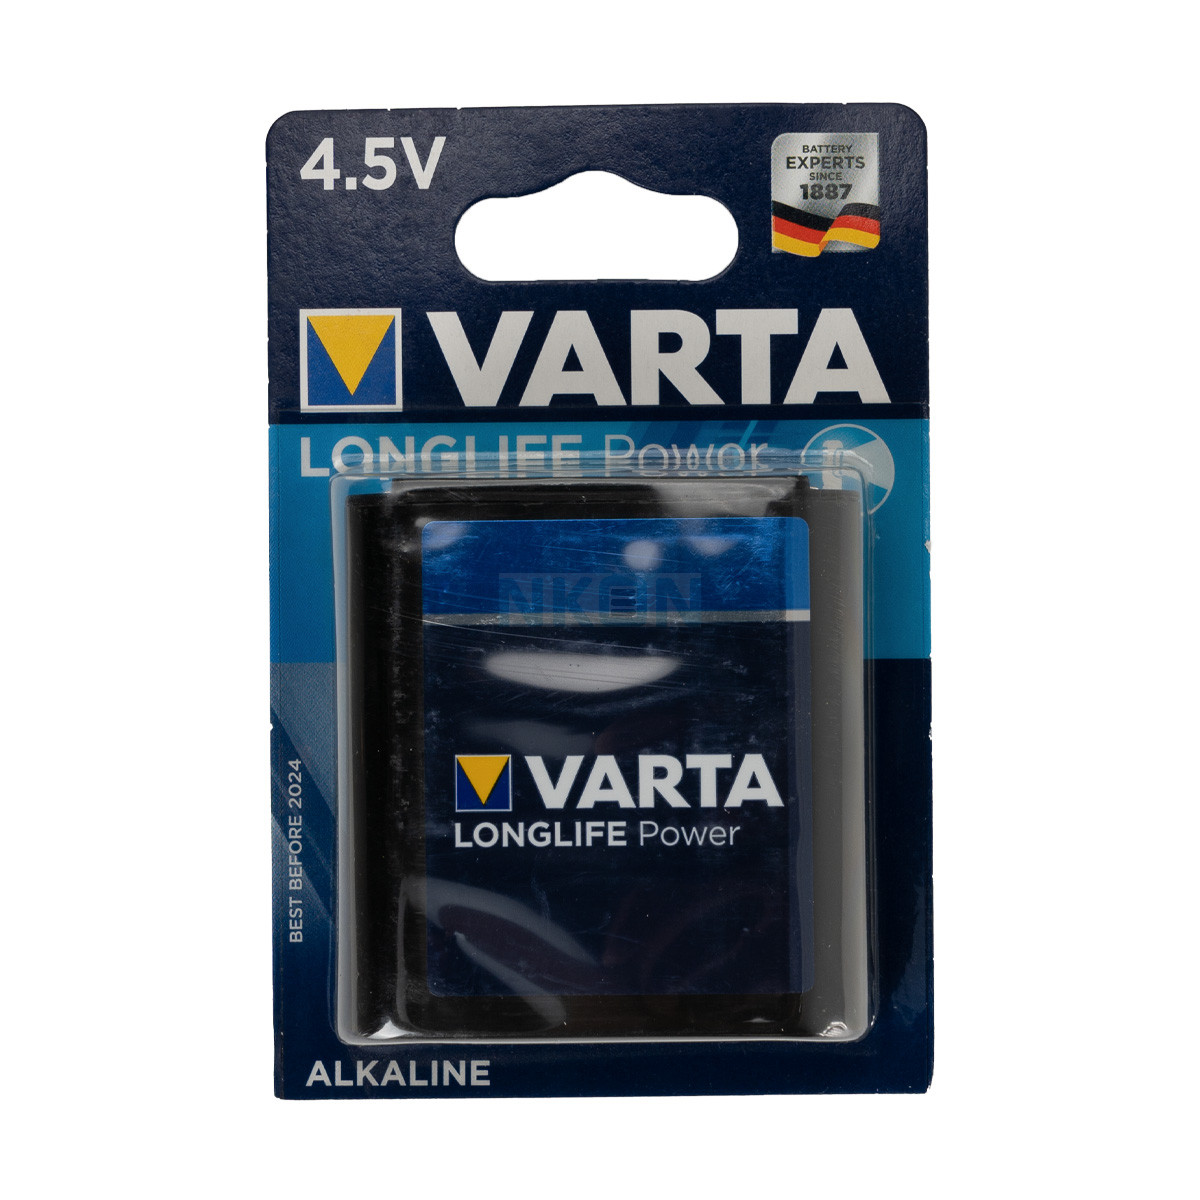 Varta Longlife Power 4.5V 3LR12 - Additional sizes - Alkaline